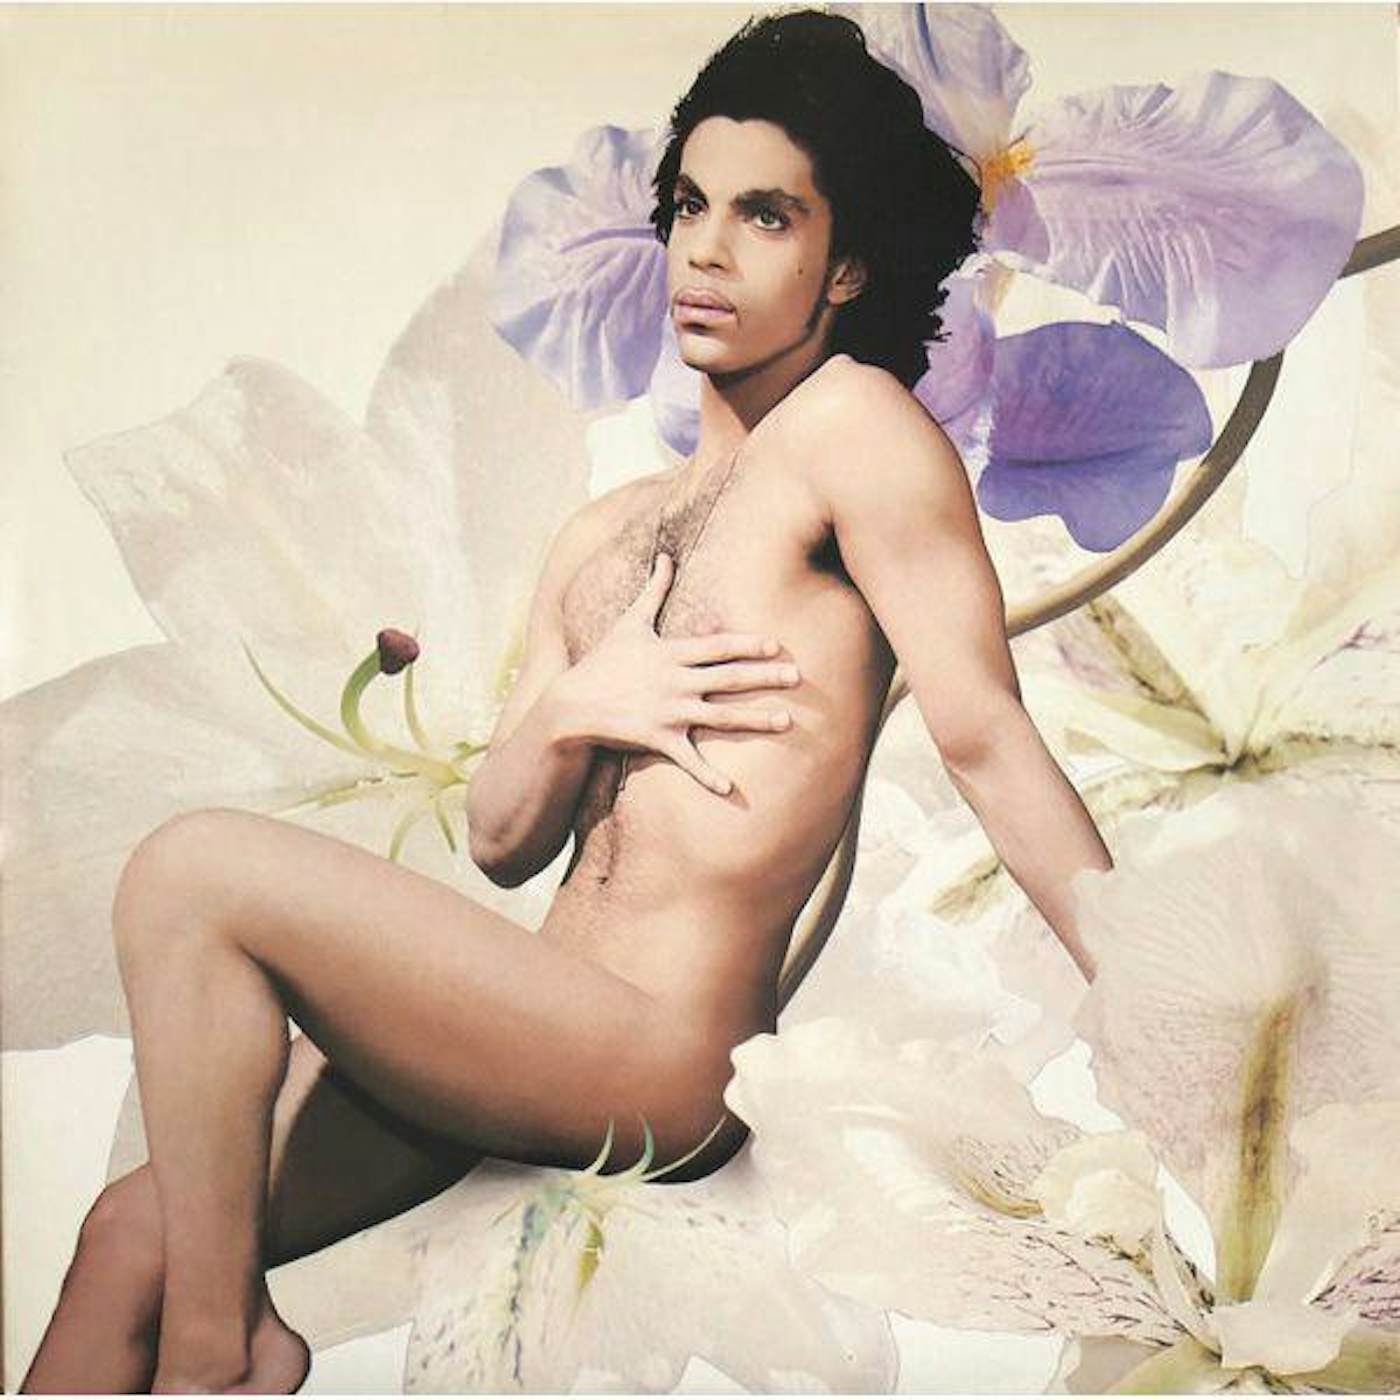 Prince Lovesexy Vinyl Record